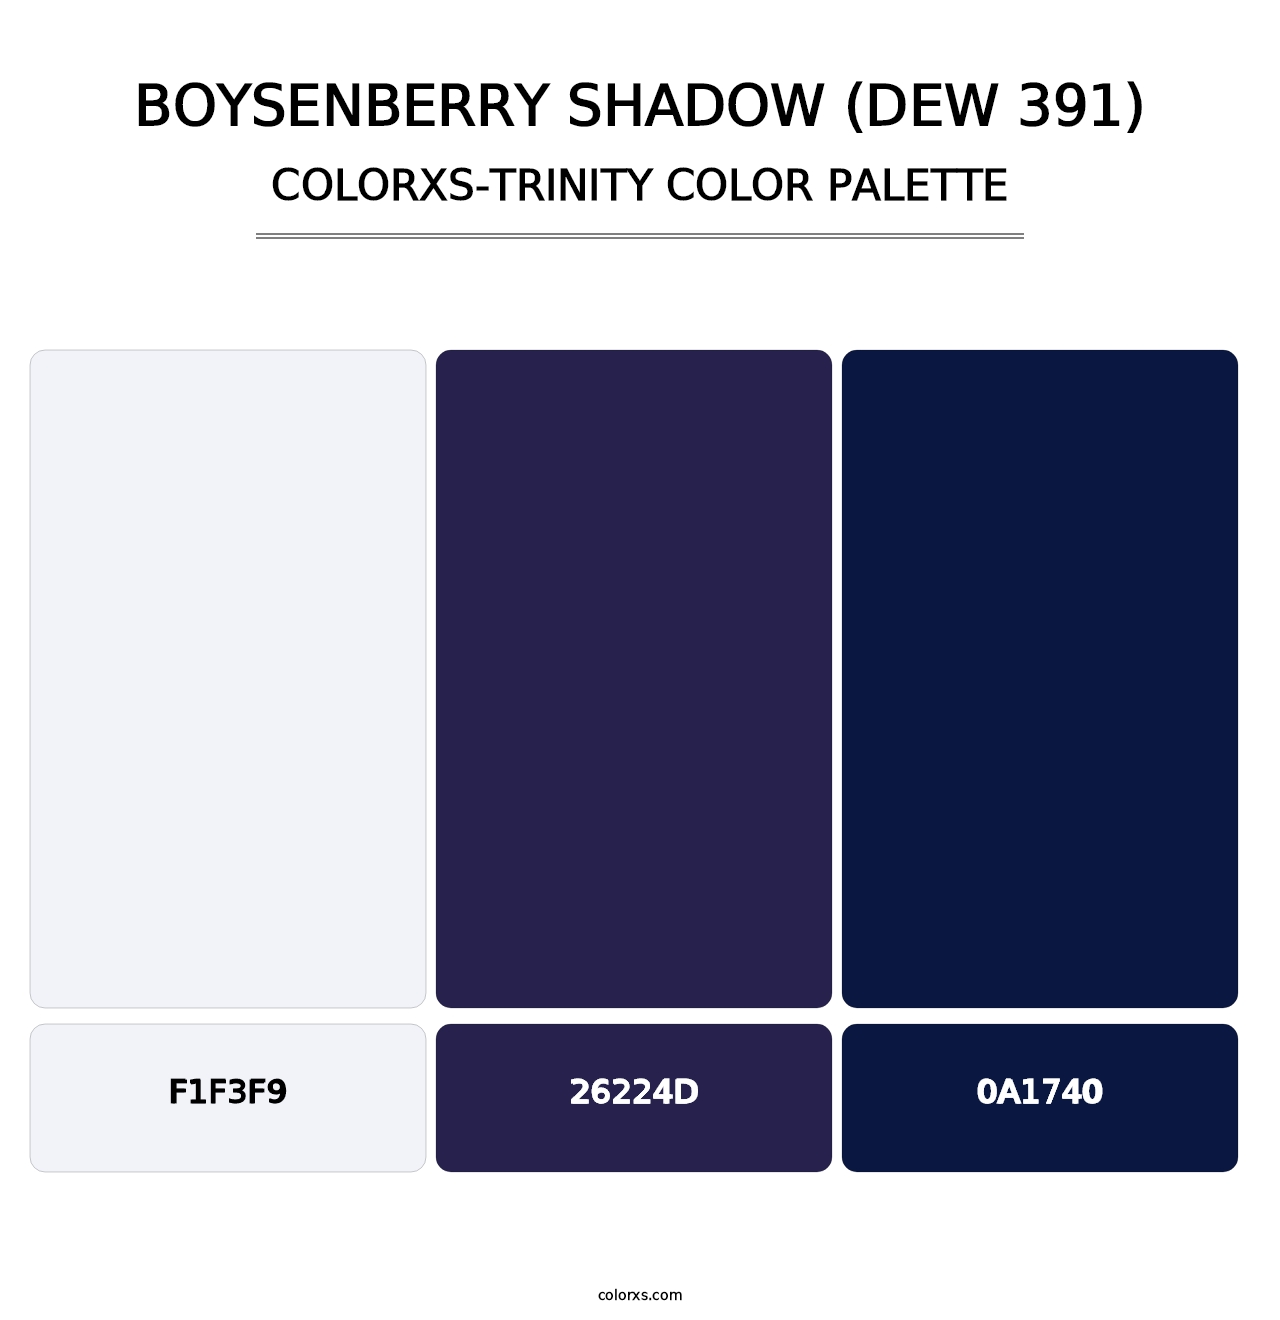 Boysenberry Shadow (DEW 391) - Colorxs Trinity Palette